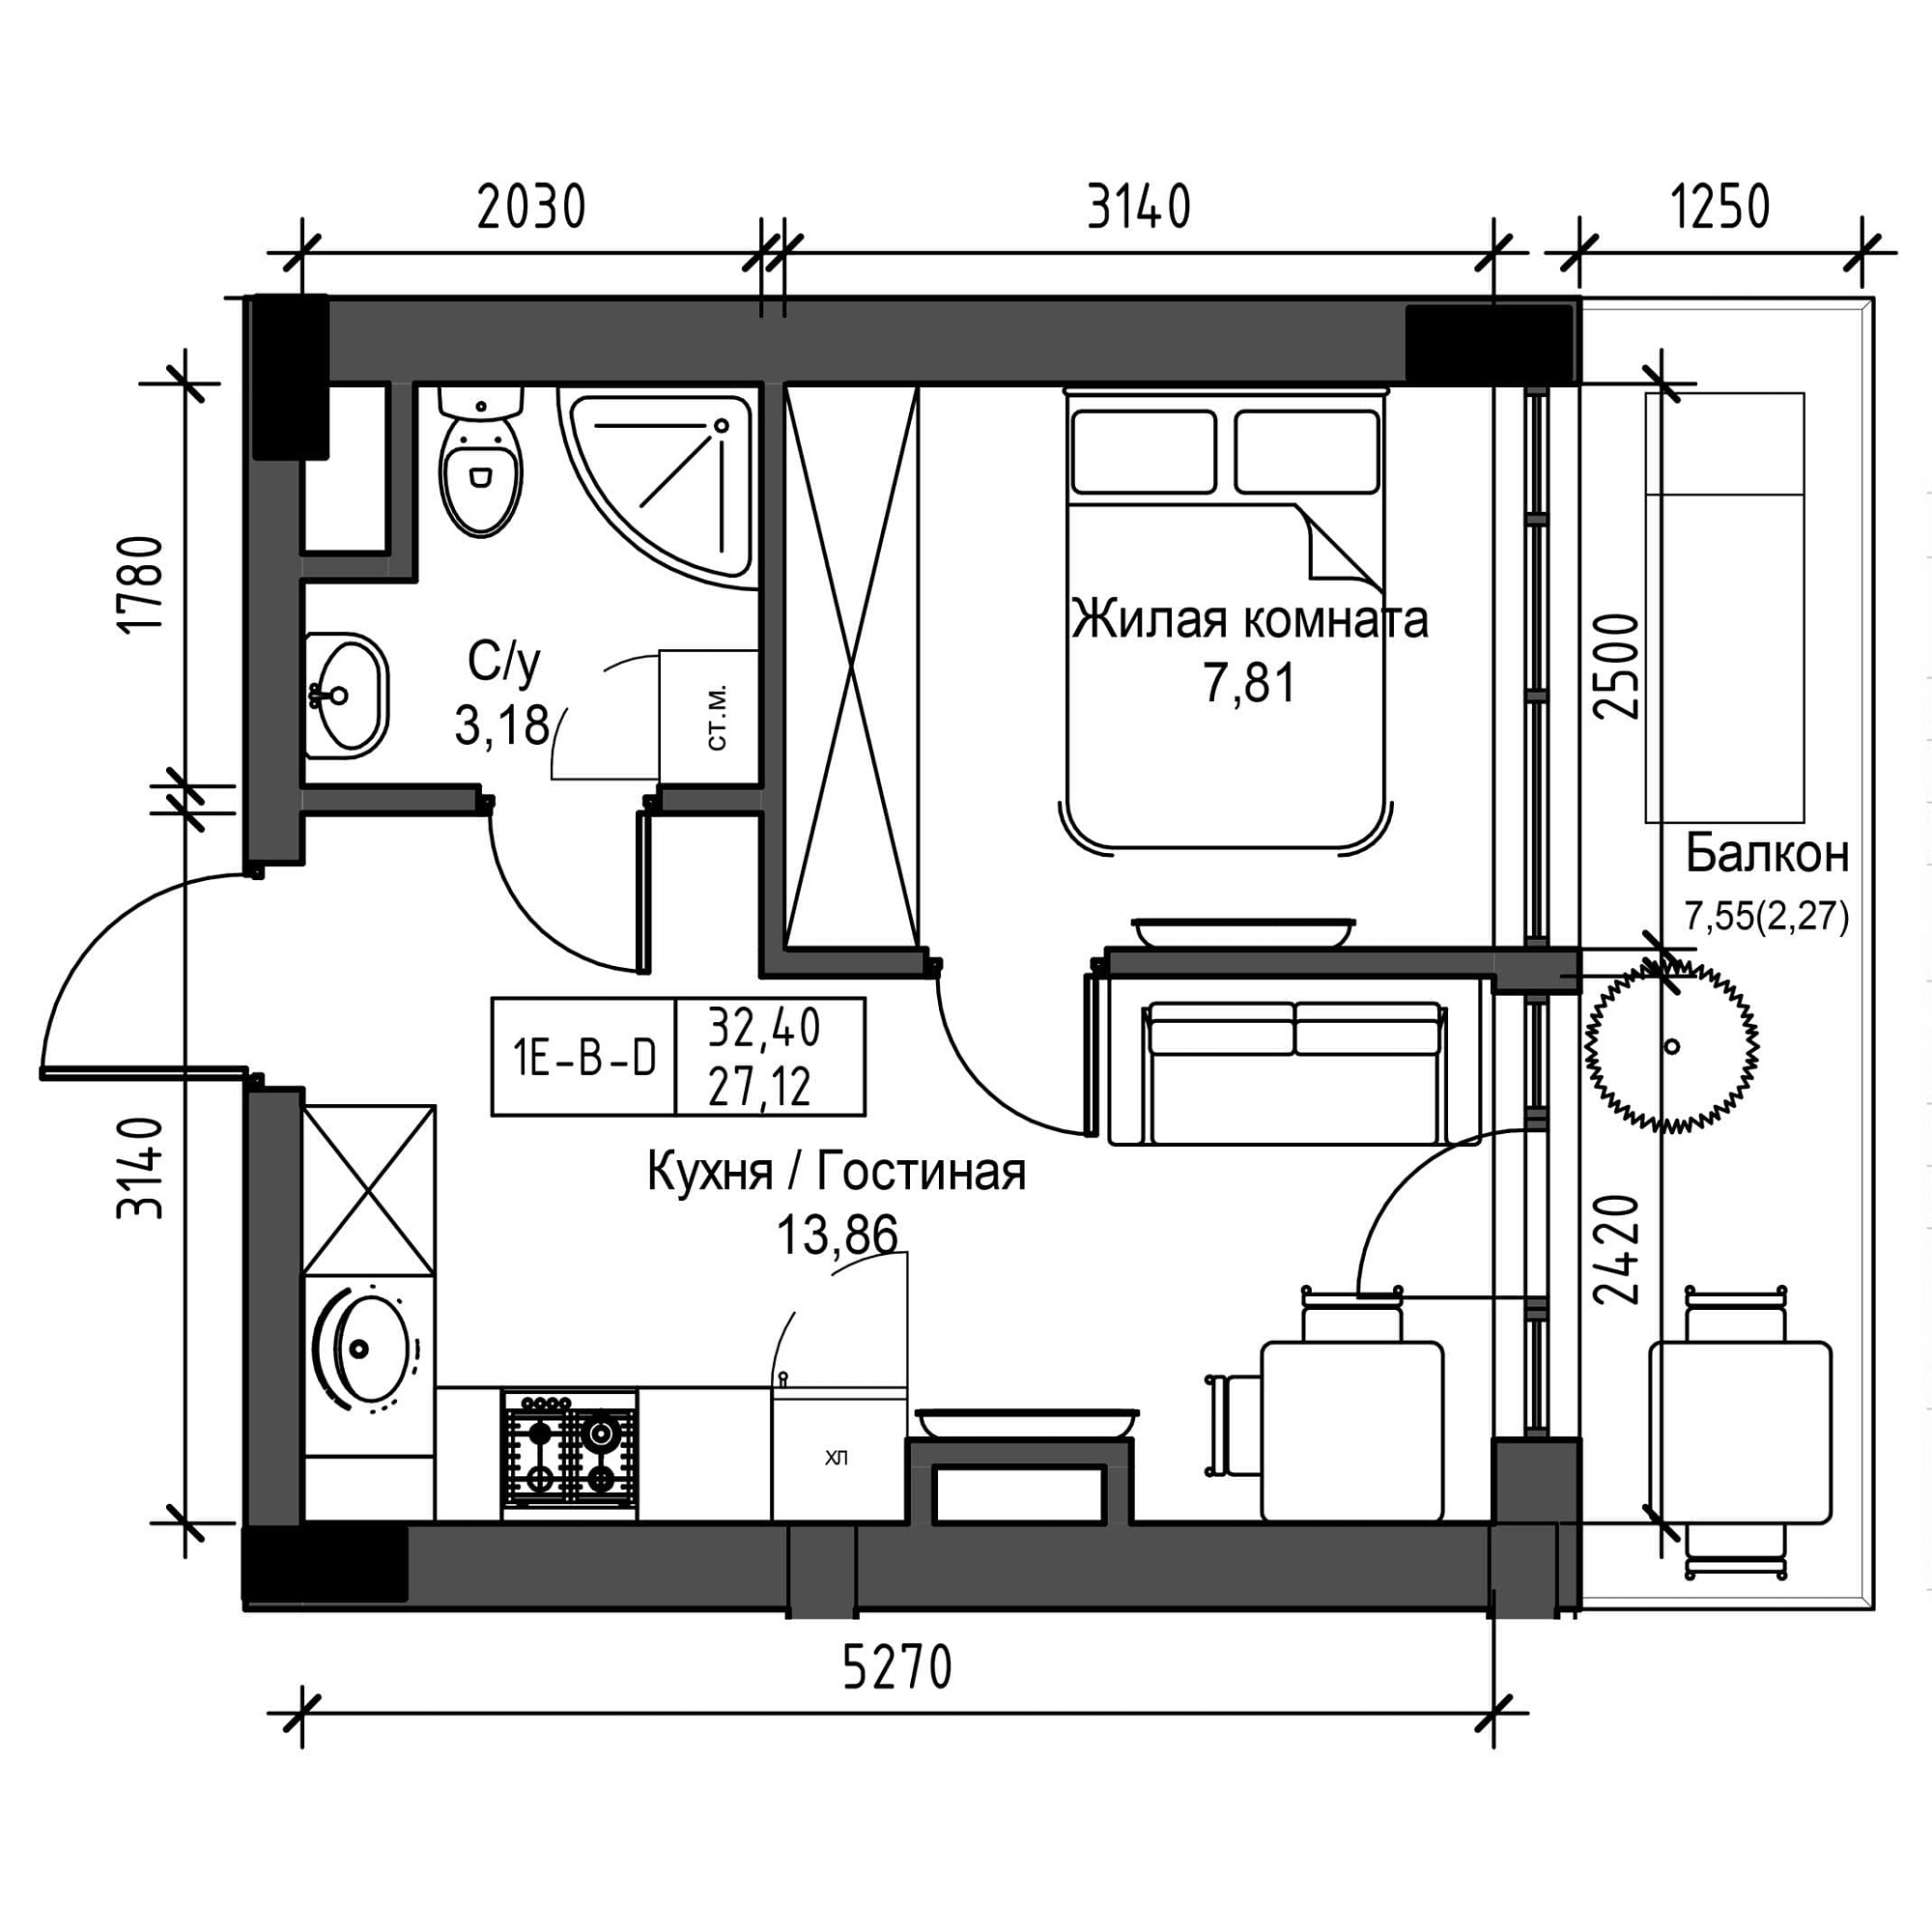 Планування 1-к квартира площею 27.12м2, UM-001-07/0003.